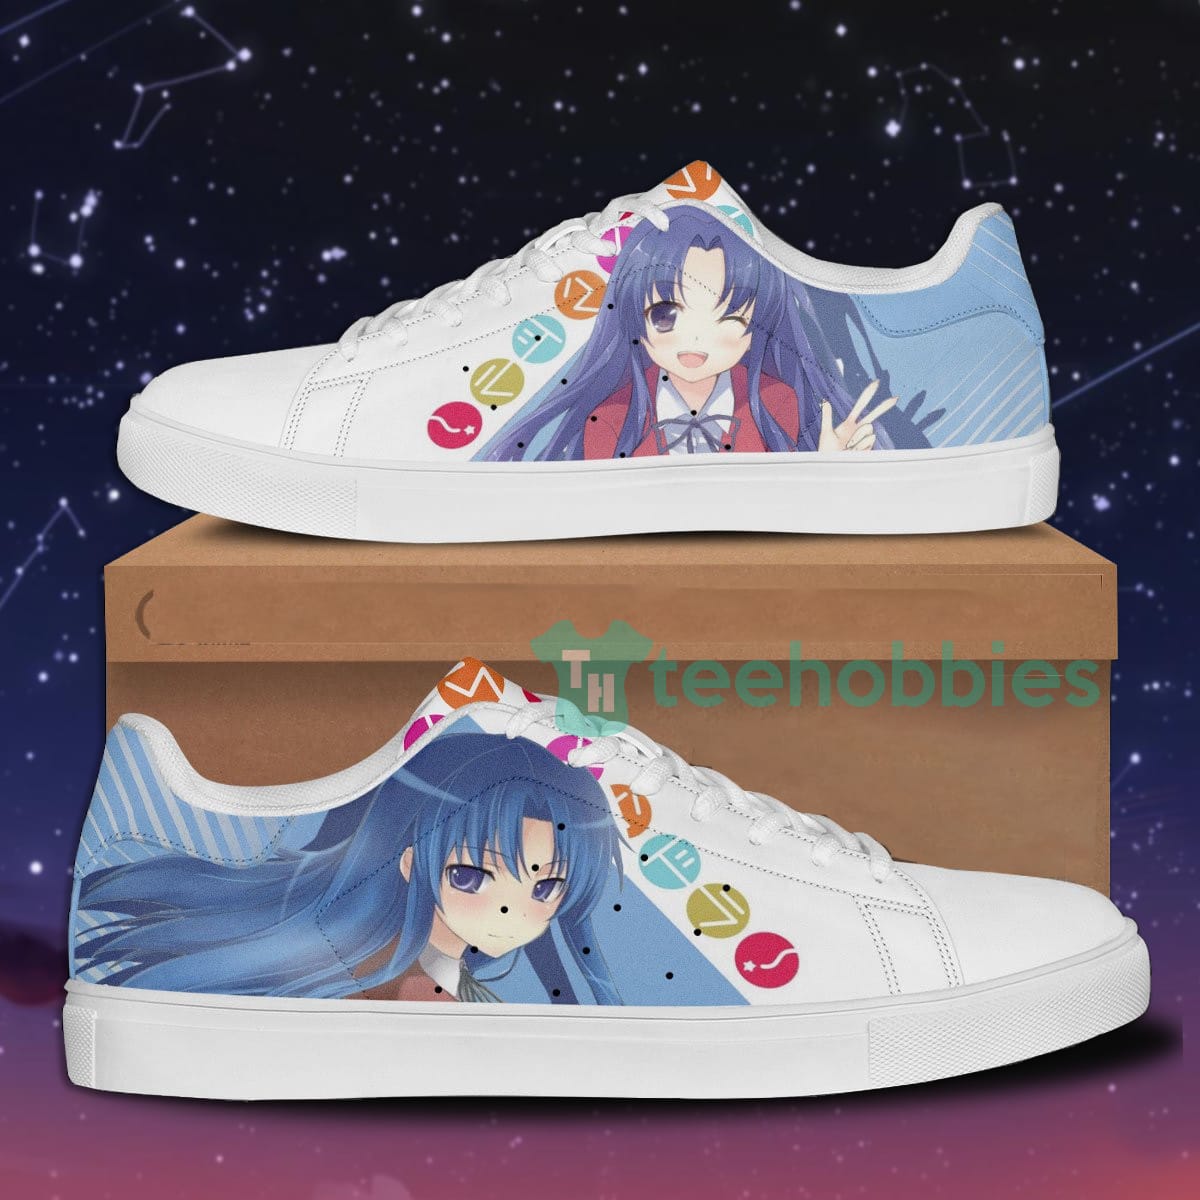 Toradora Ami Kawashima Custom Anime Skate Shoes For Men And Women